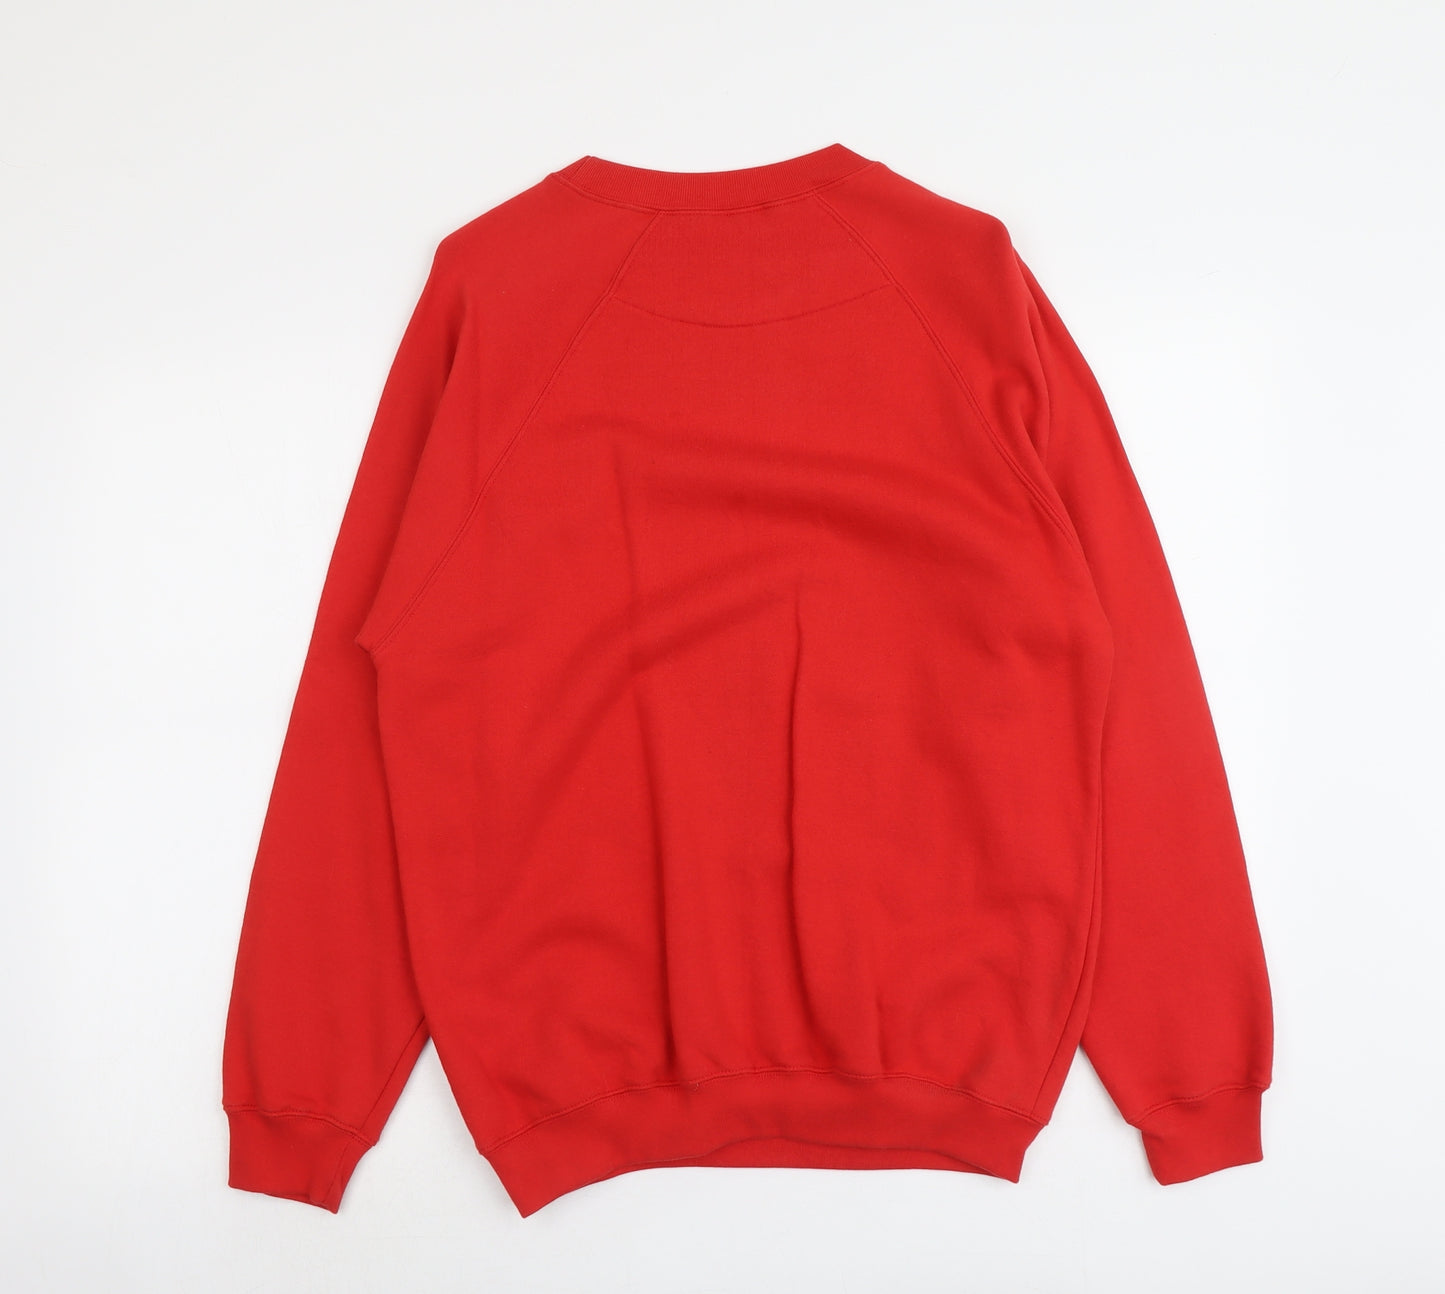 Fairtrade Mens Red Cotton Pullover Sweatshirt Size M